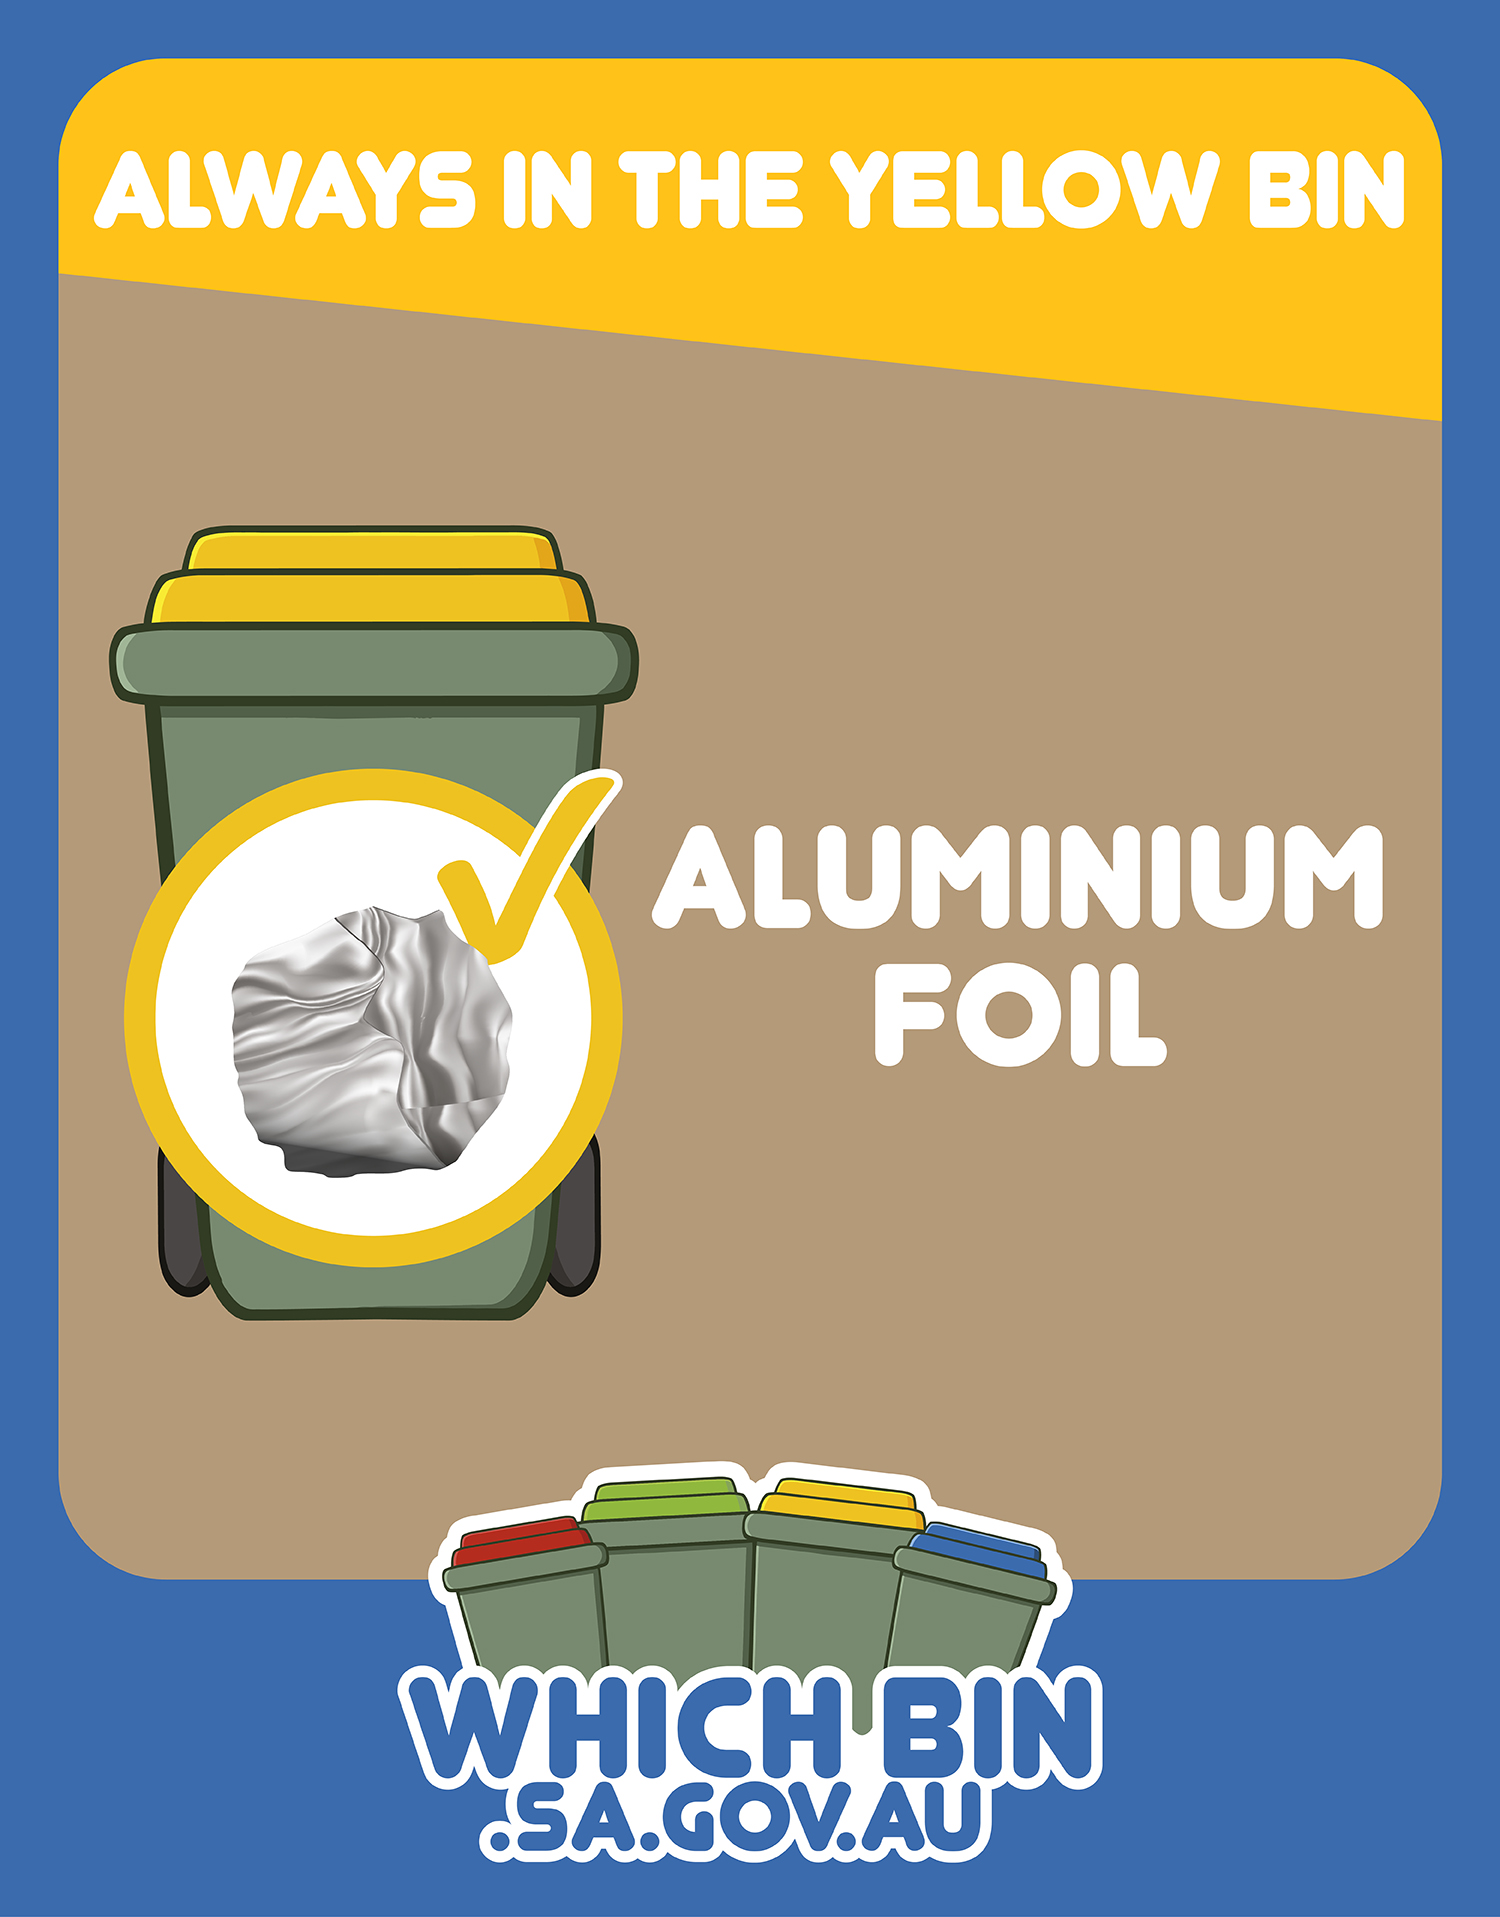 Always in the yellow bin: aluminium foil